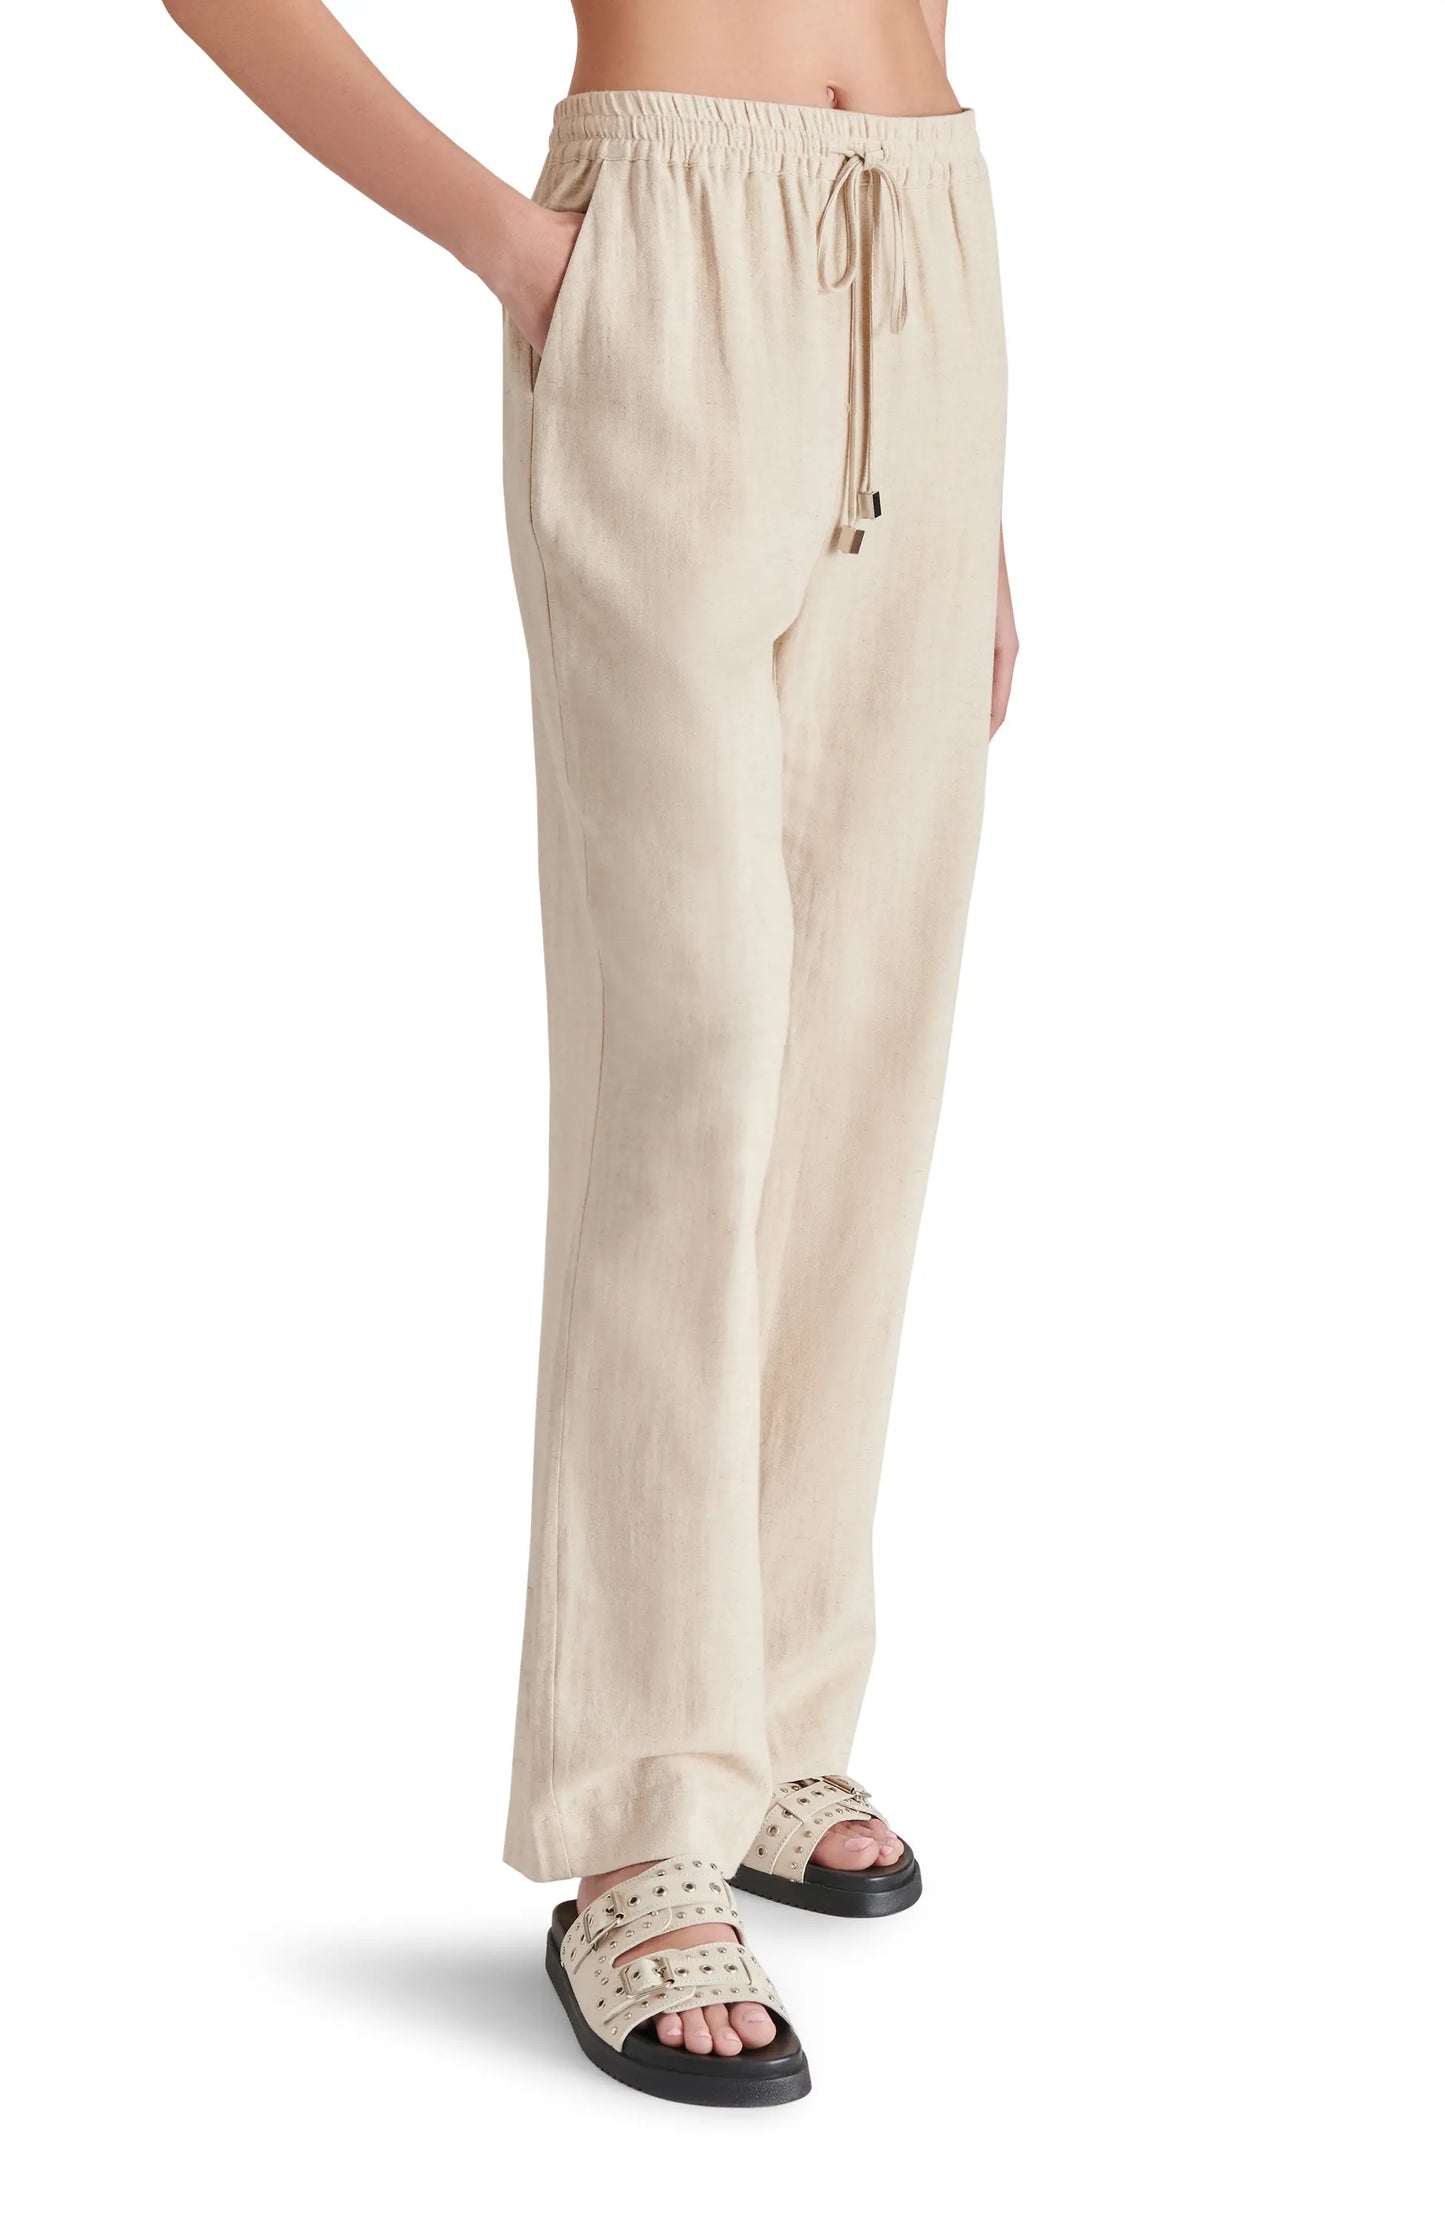 Venetia Cotton & Linen Drawstring Pants in Natural